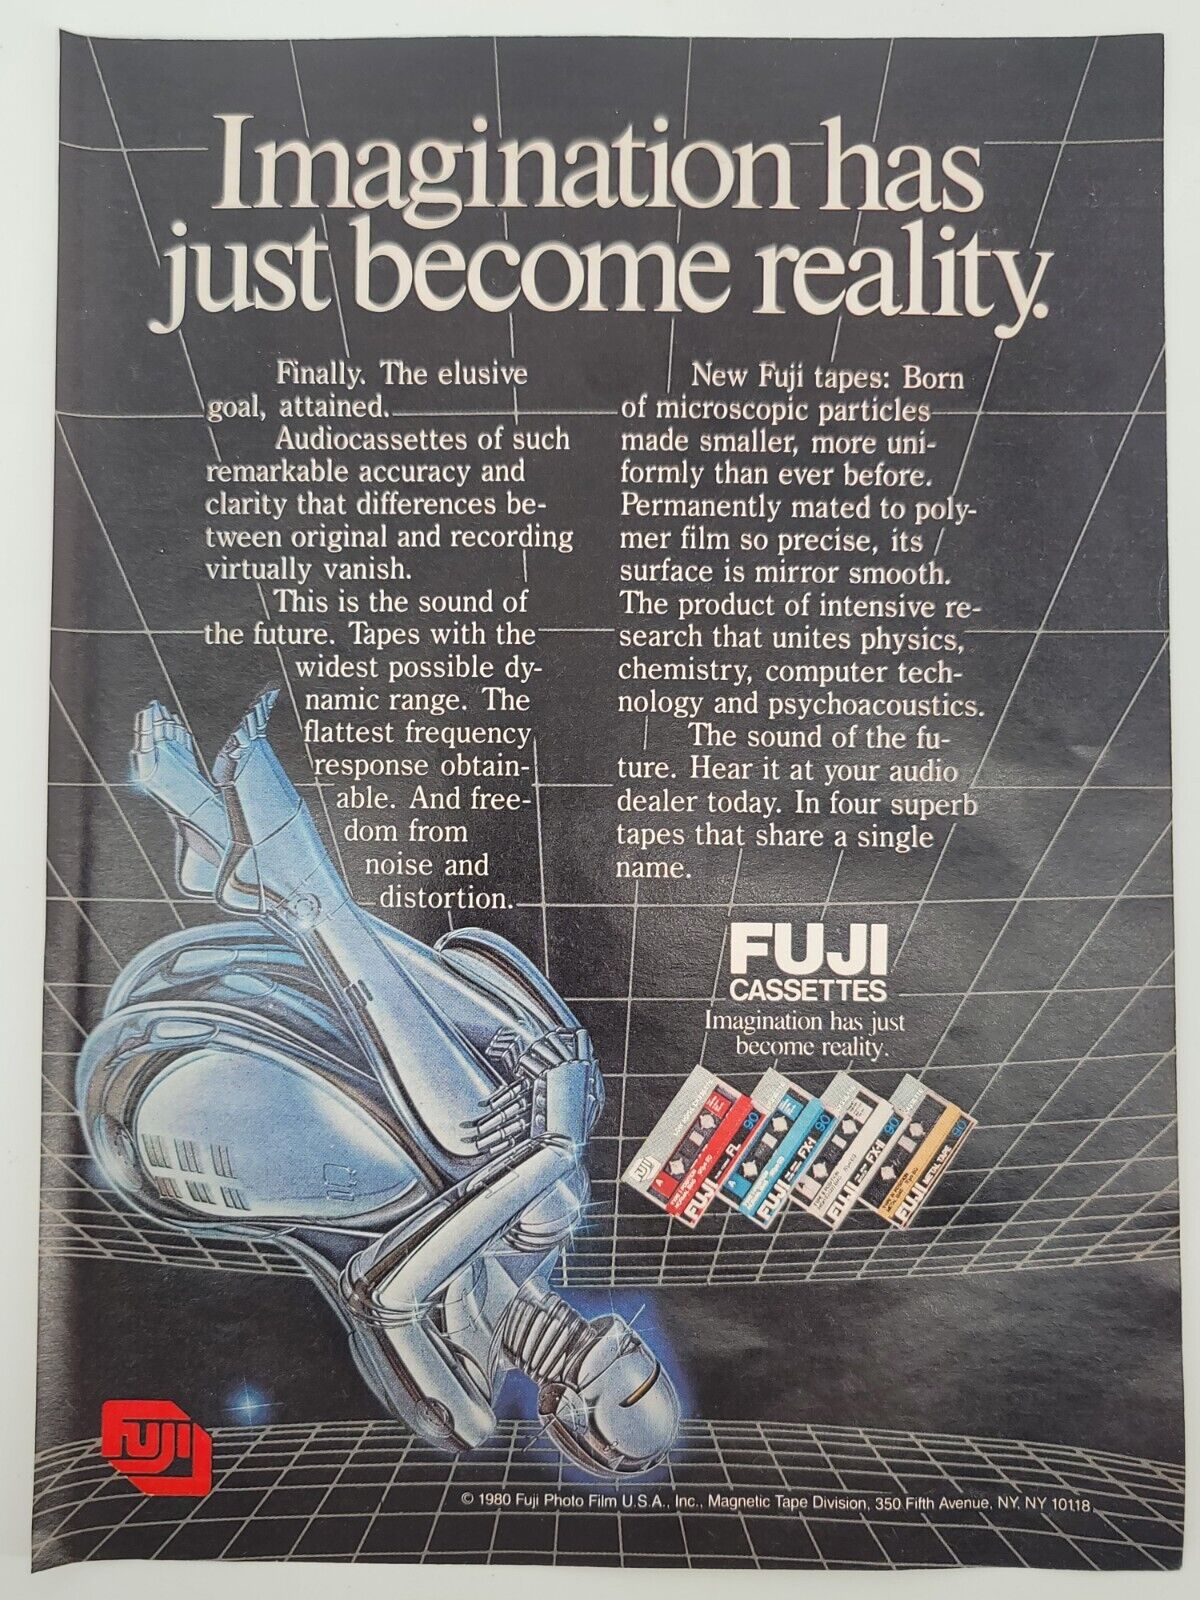 1980 Fuji Cassette Tapes - Vintage Magazine Print Ad - Imagination